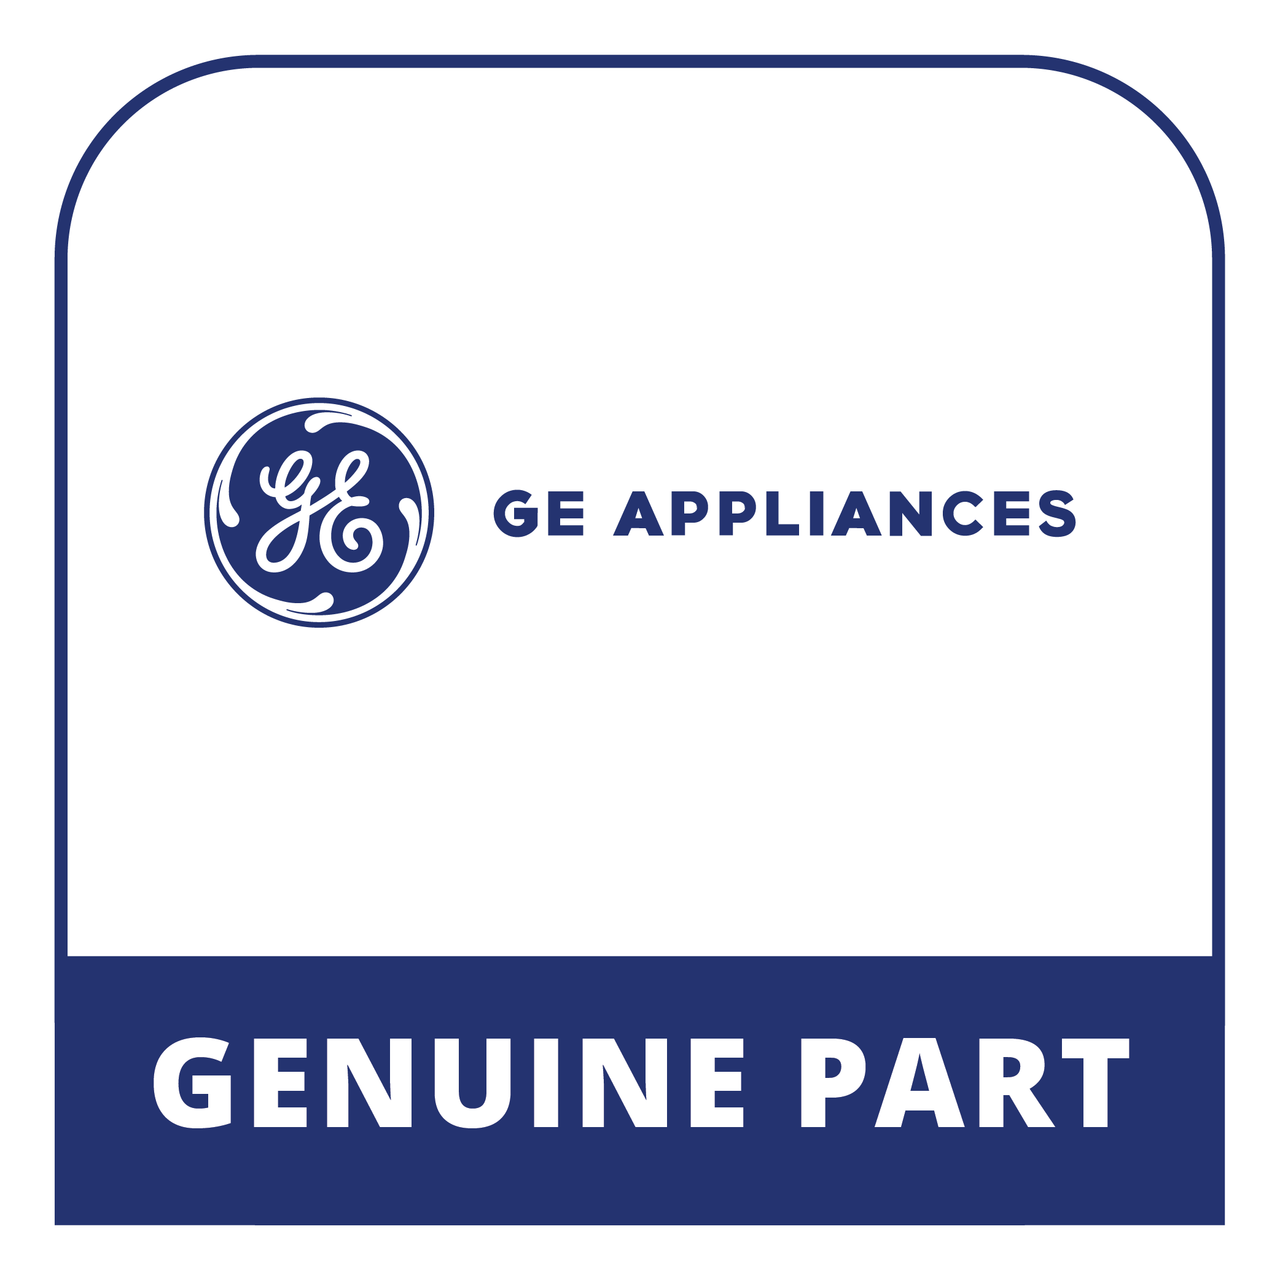 GE Appliances WB49X47646 - Metal Tray - Genuine GE Appliances Part